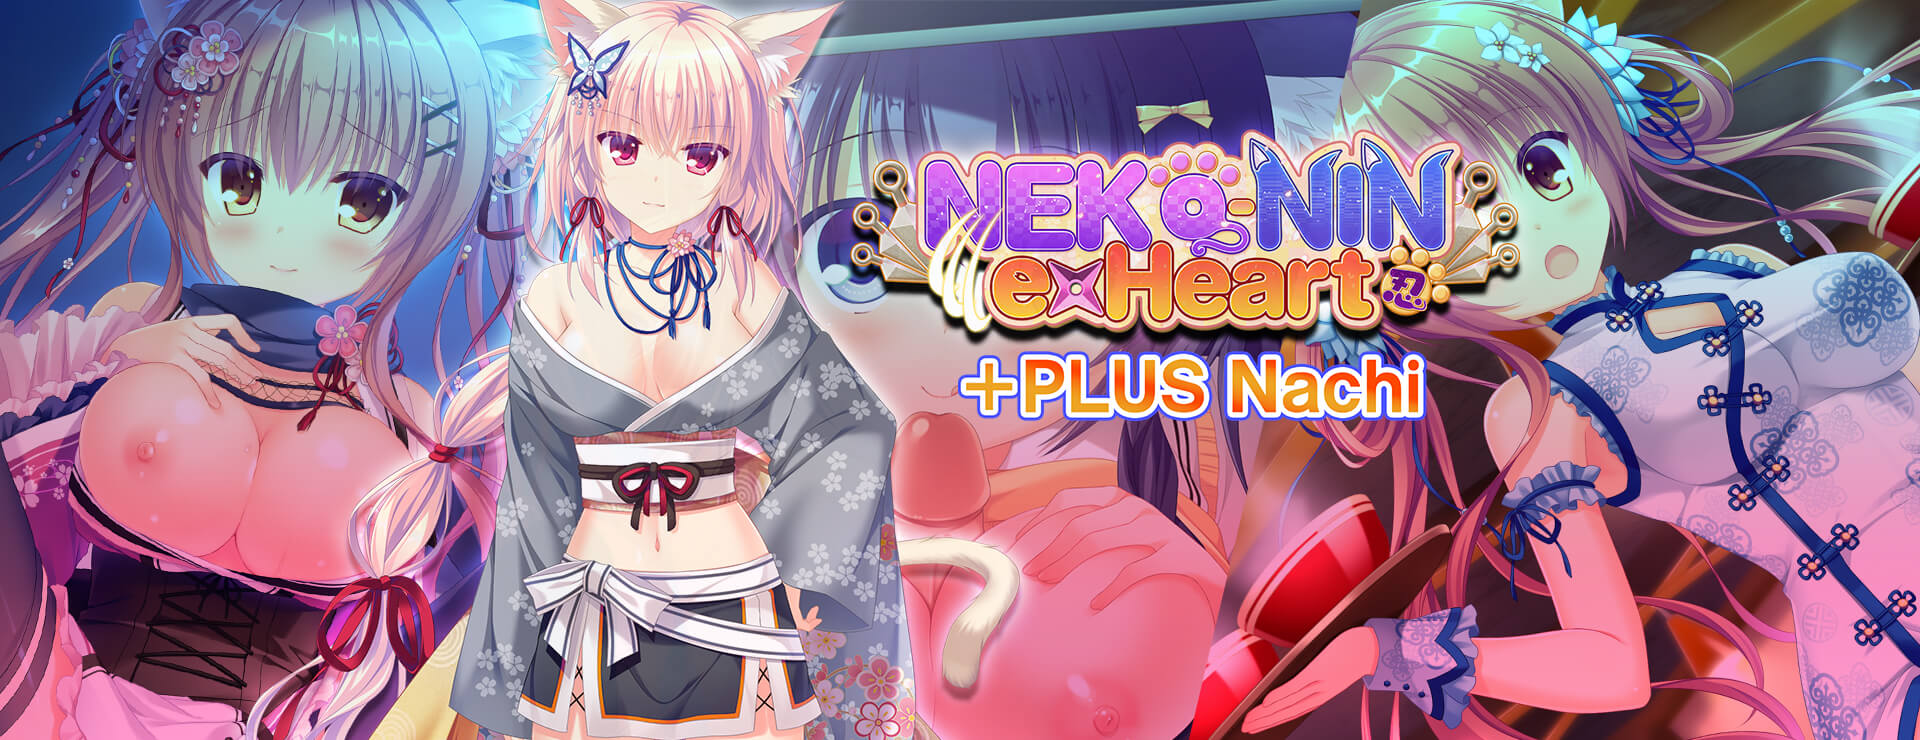 NEKO-NIN exHeart +PLUS Nachi (DLC Part 1) - Powieść wizualna Gra